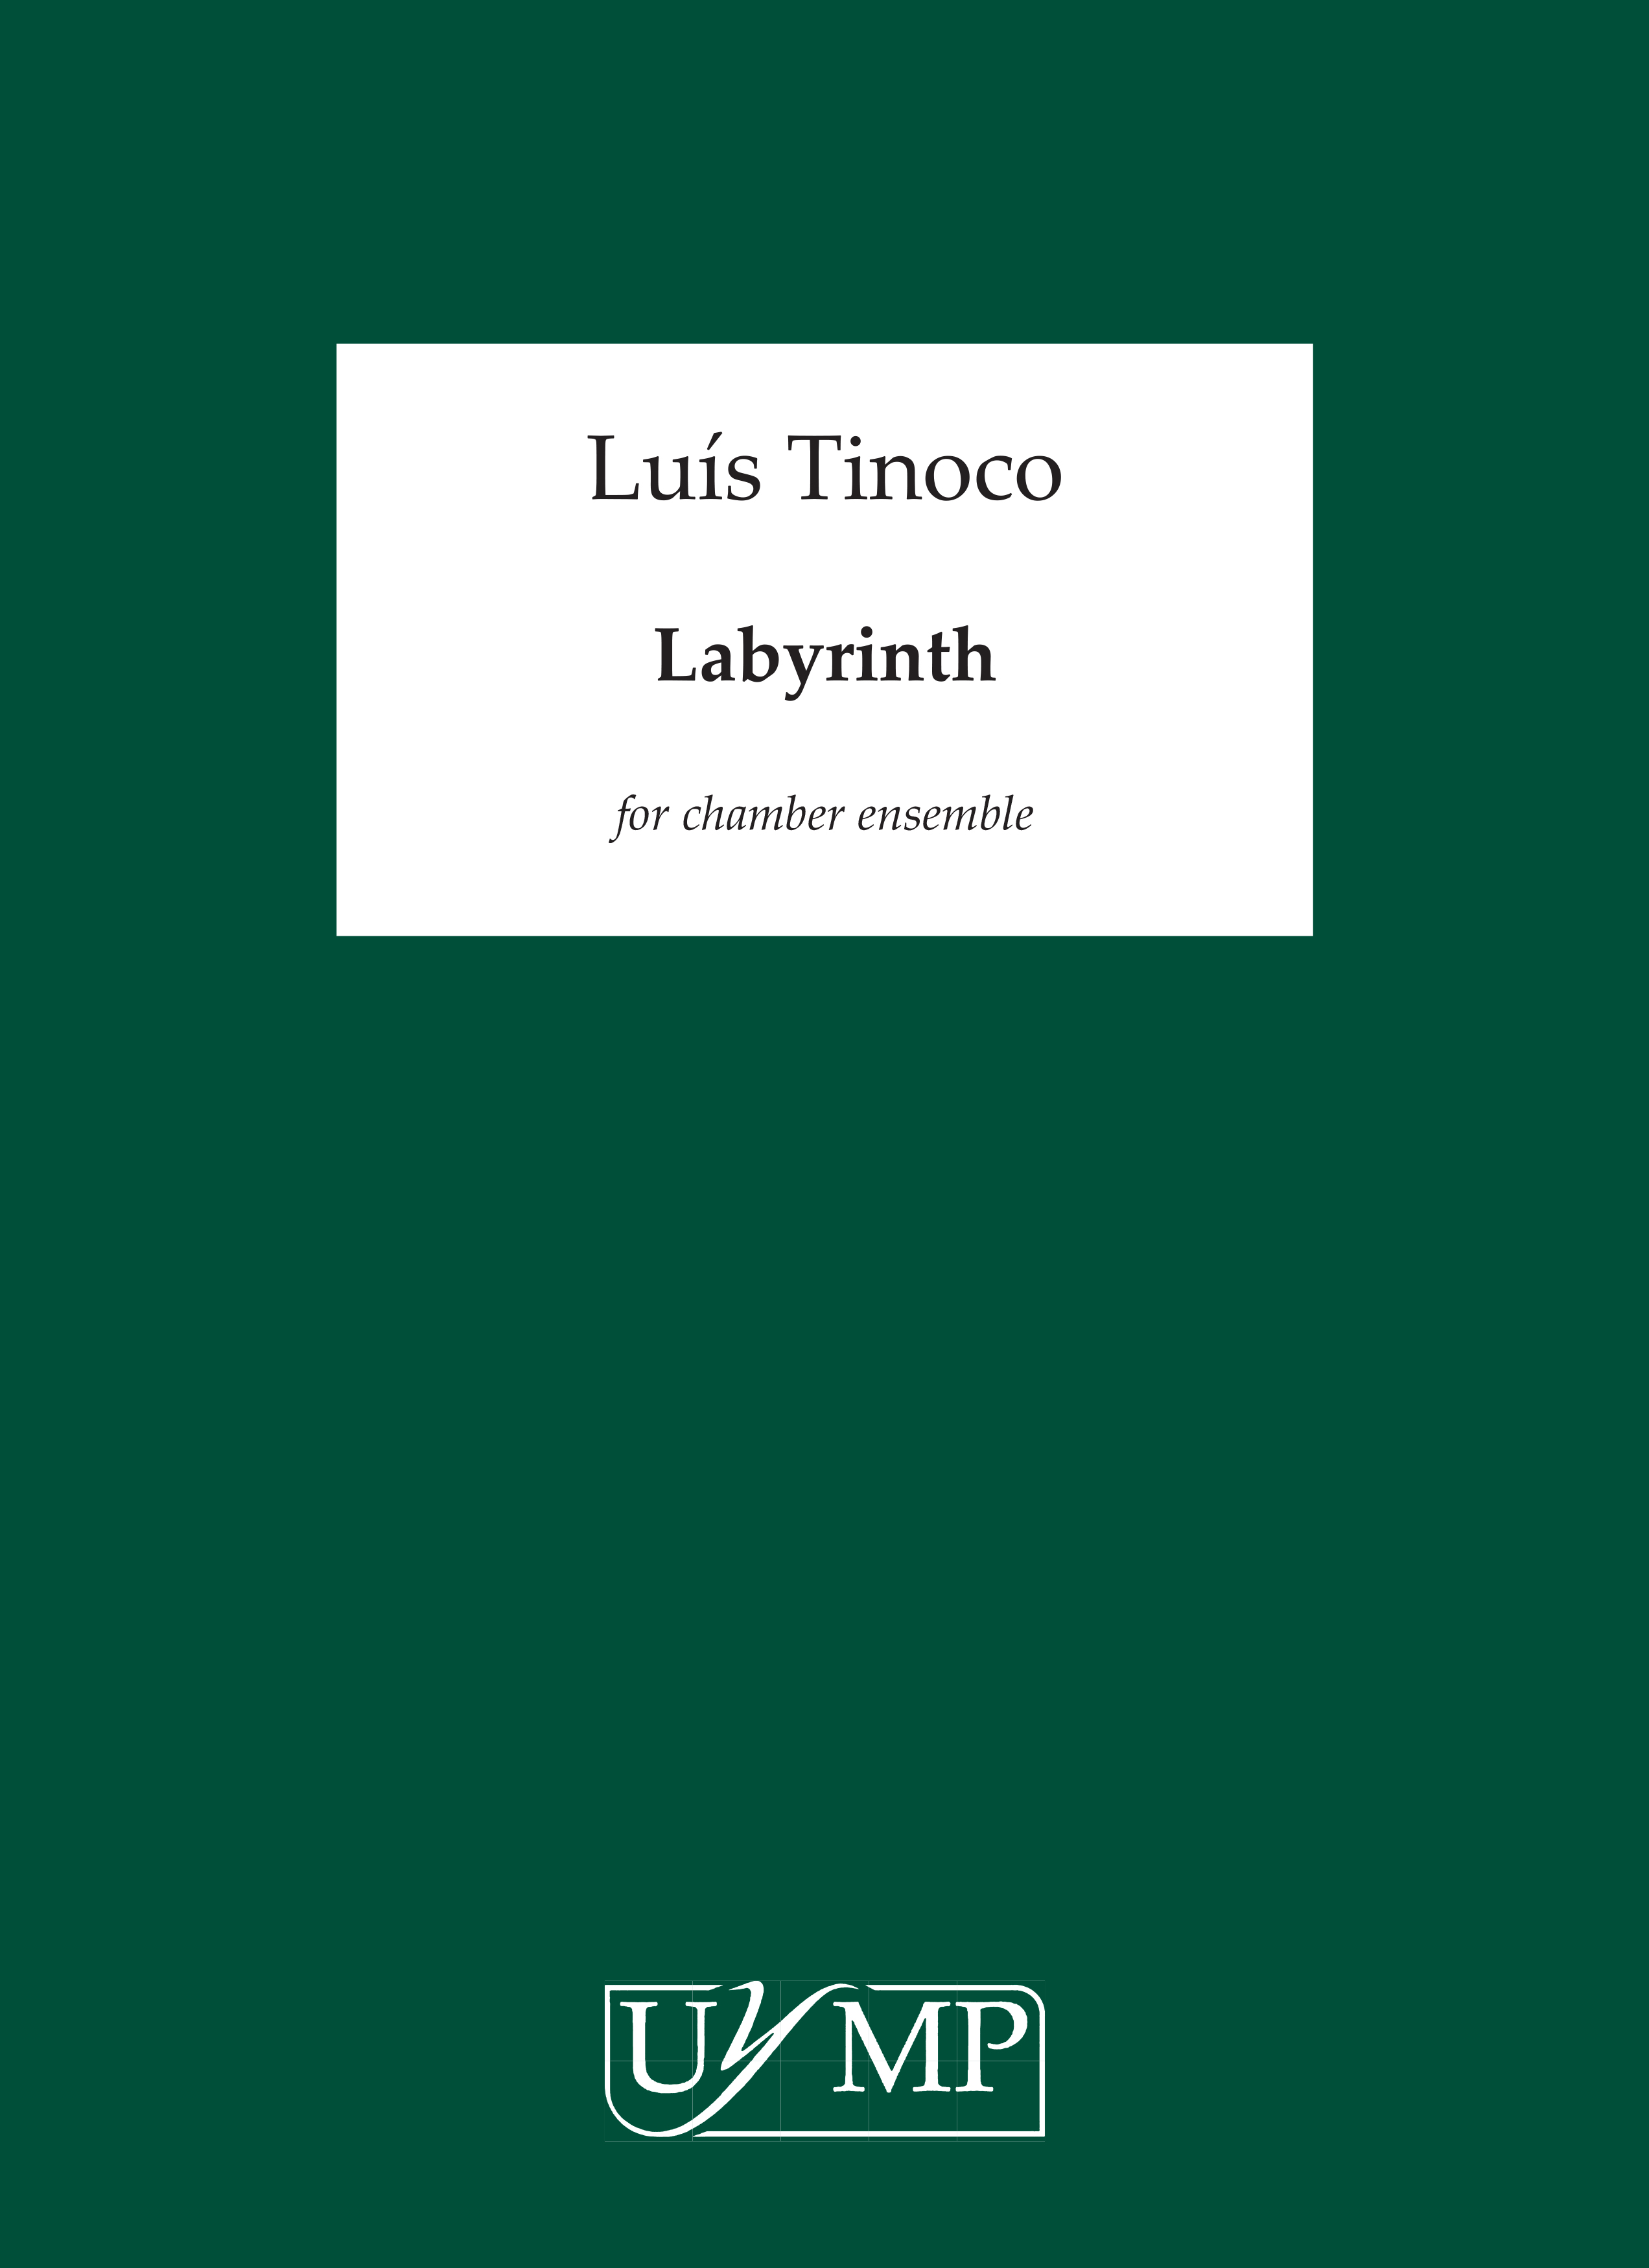 Lus Tinoco: Labyrinth